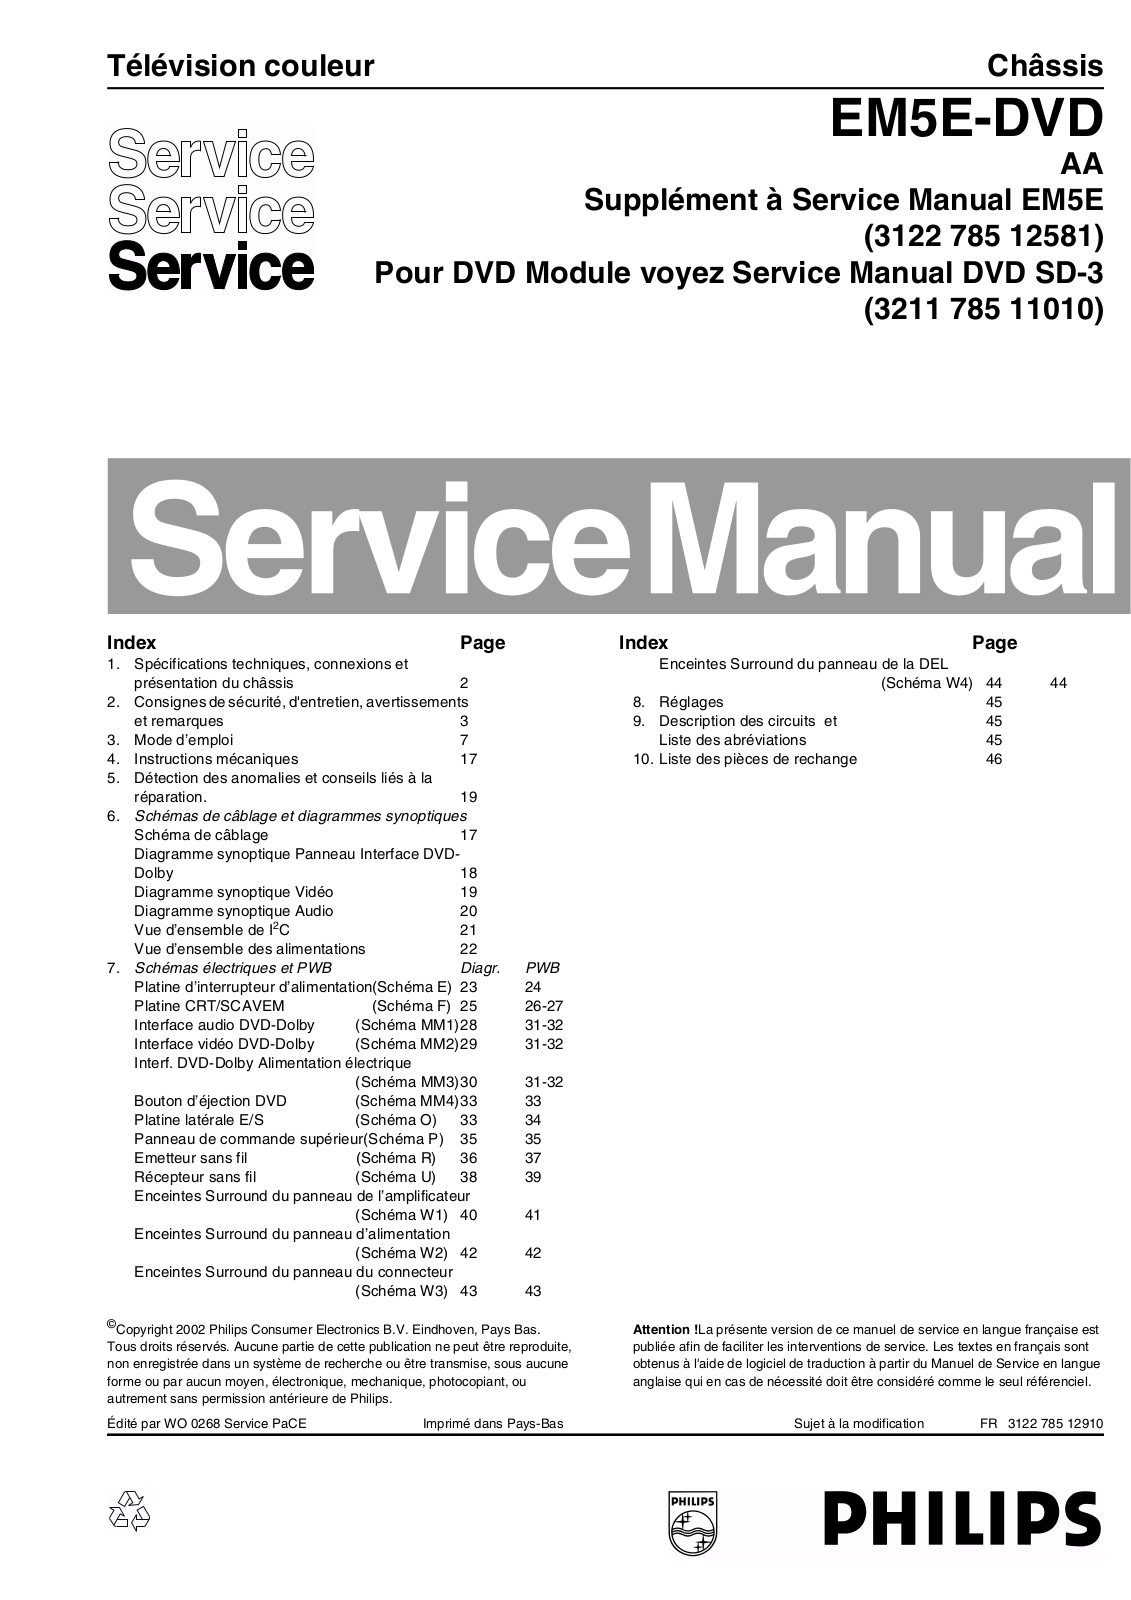 Philips EM5E-DVD AA Service Manual